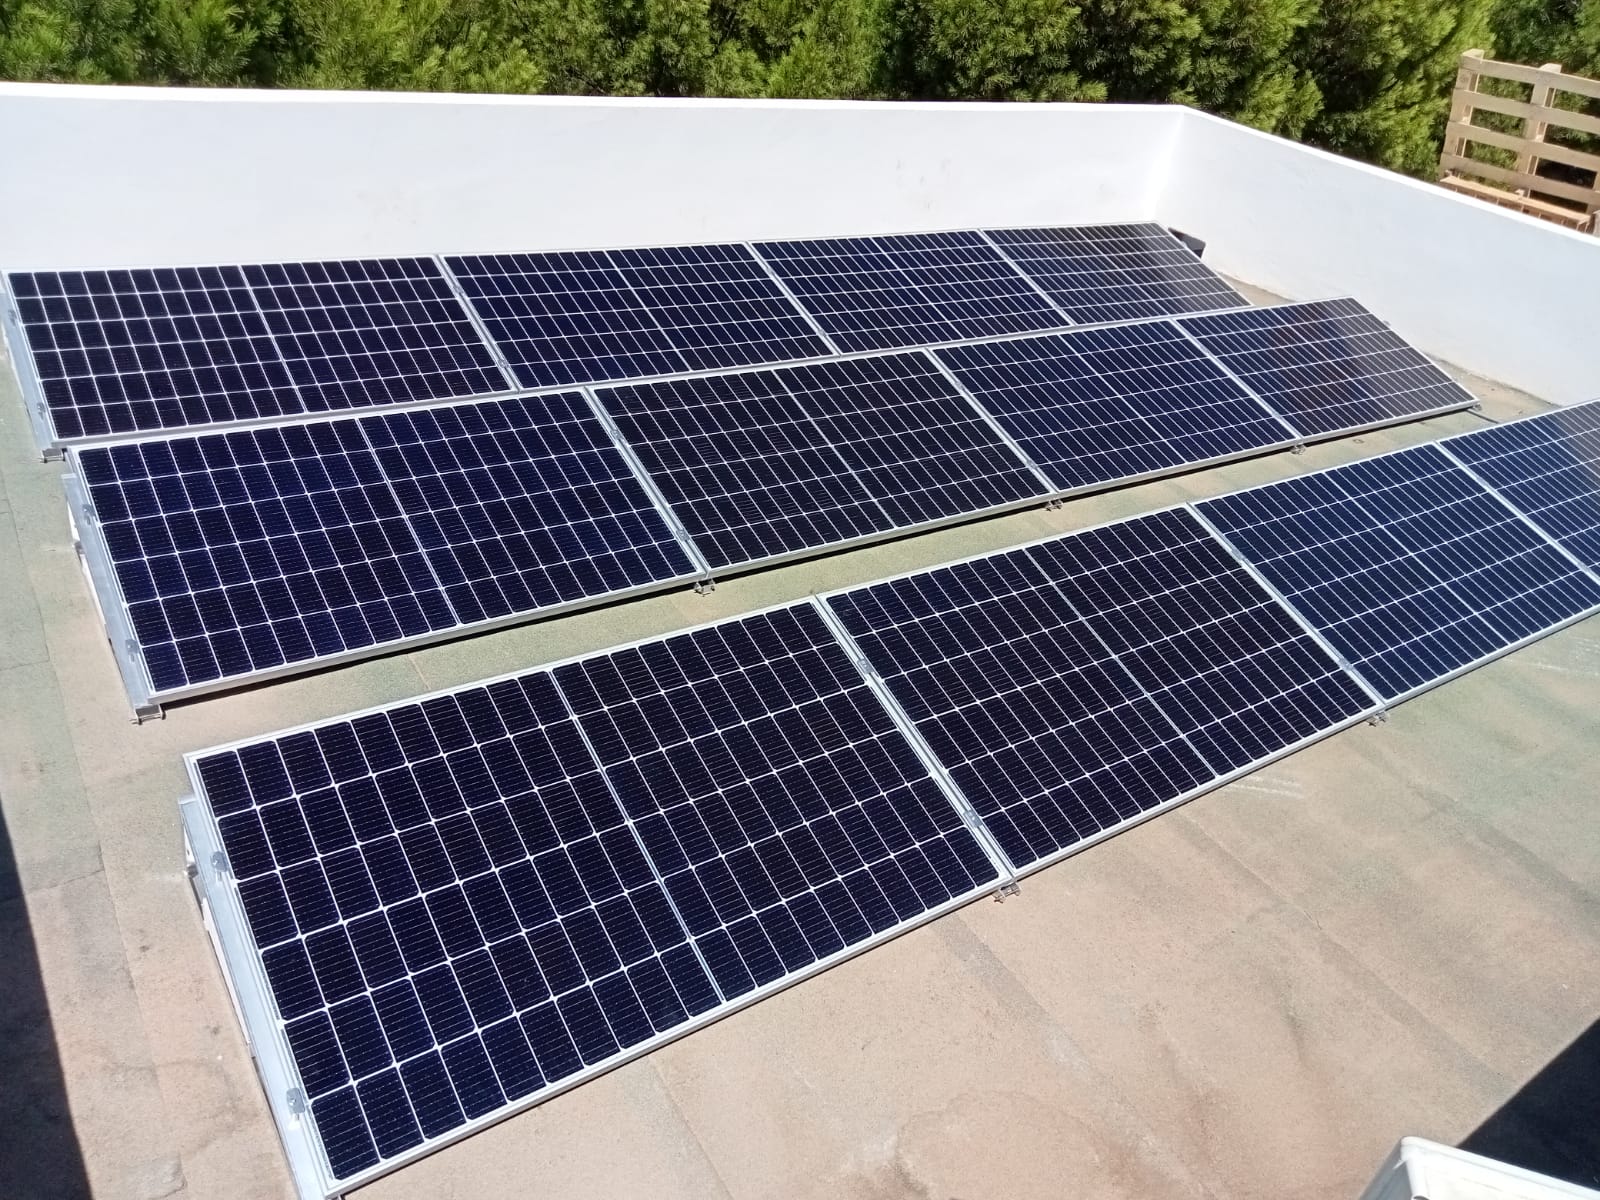 18X 380 wp Solar Panels, Altea, Alicante (Grid system)